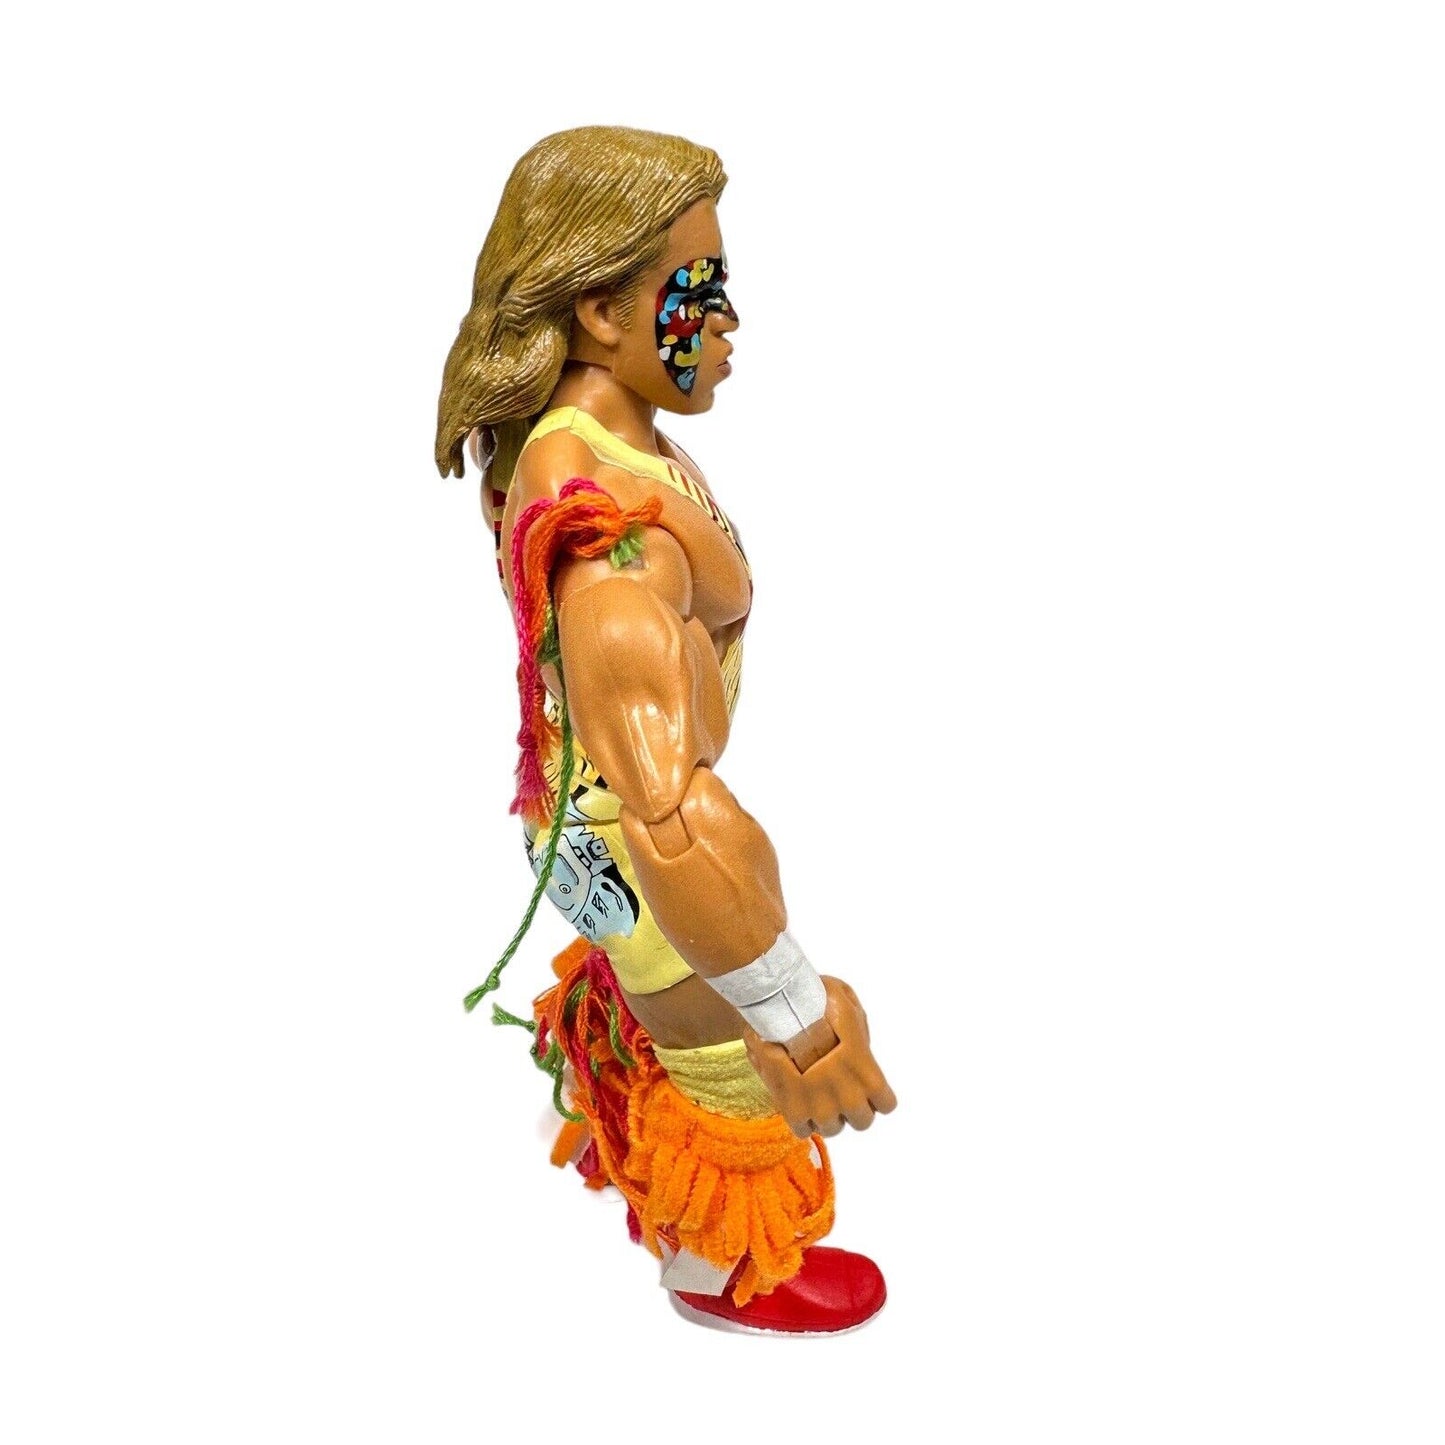 WWE Wrestling Jakks Pacific 2004 Classic Ultimate Warrior Orange Action Figure